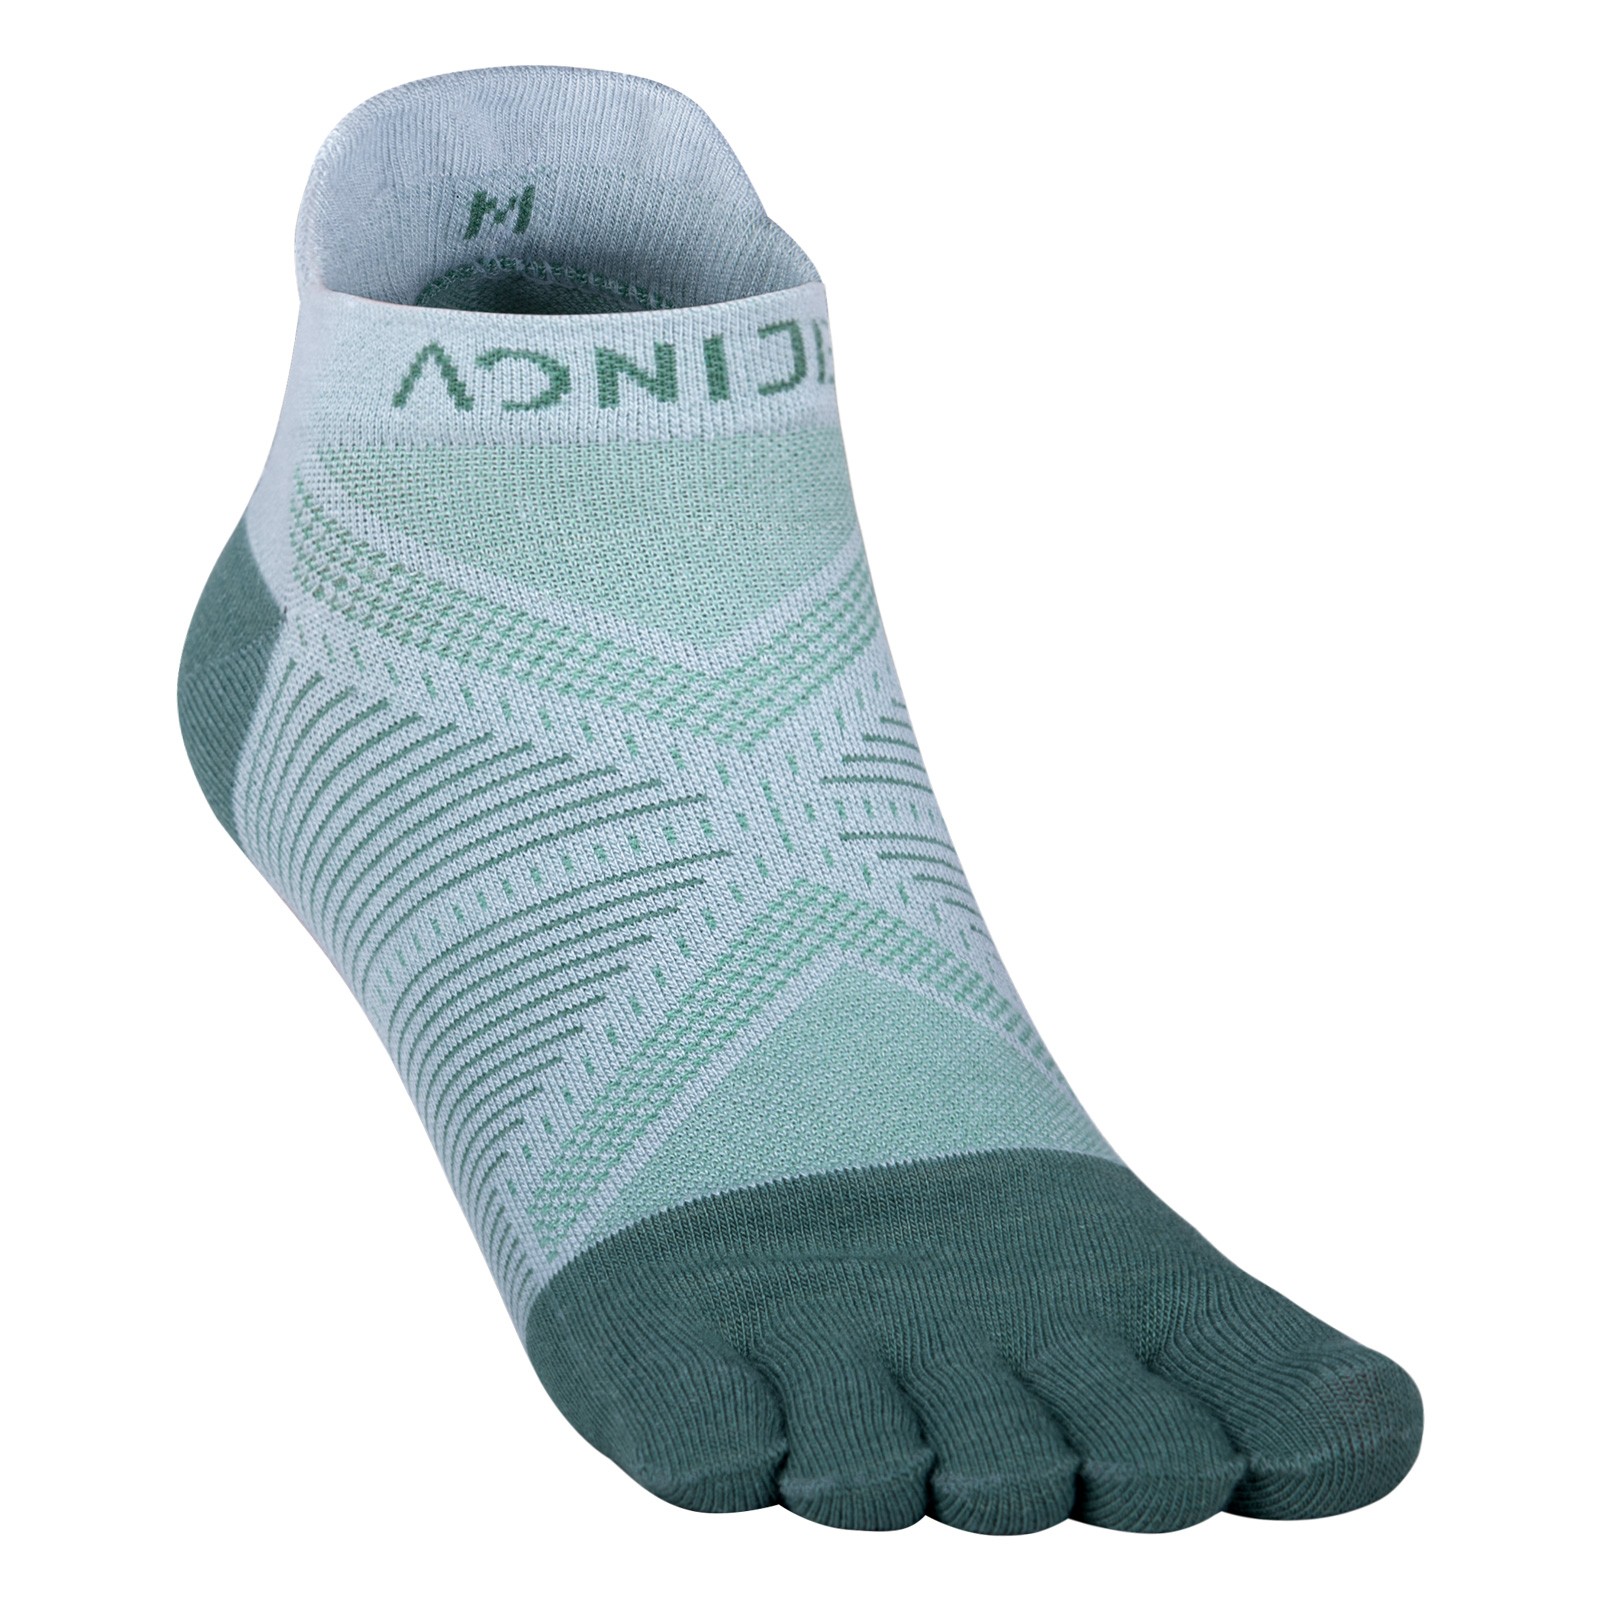 1Pair Aonijie E4824 New Sports Fve-finger Socks Breathable Coolmax  Wear-resistant Outdoor Athletic Toe Socks